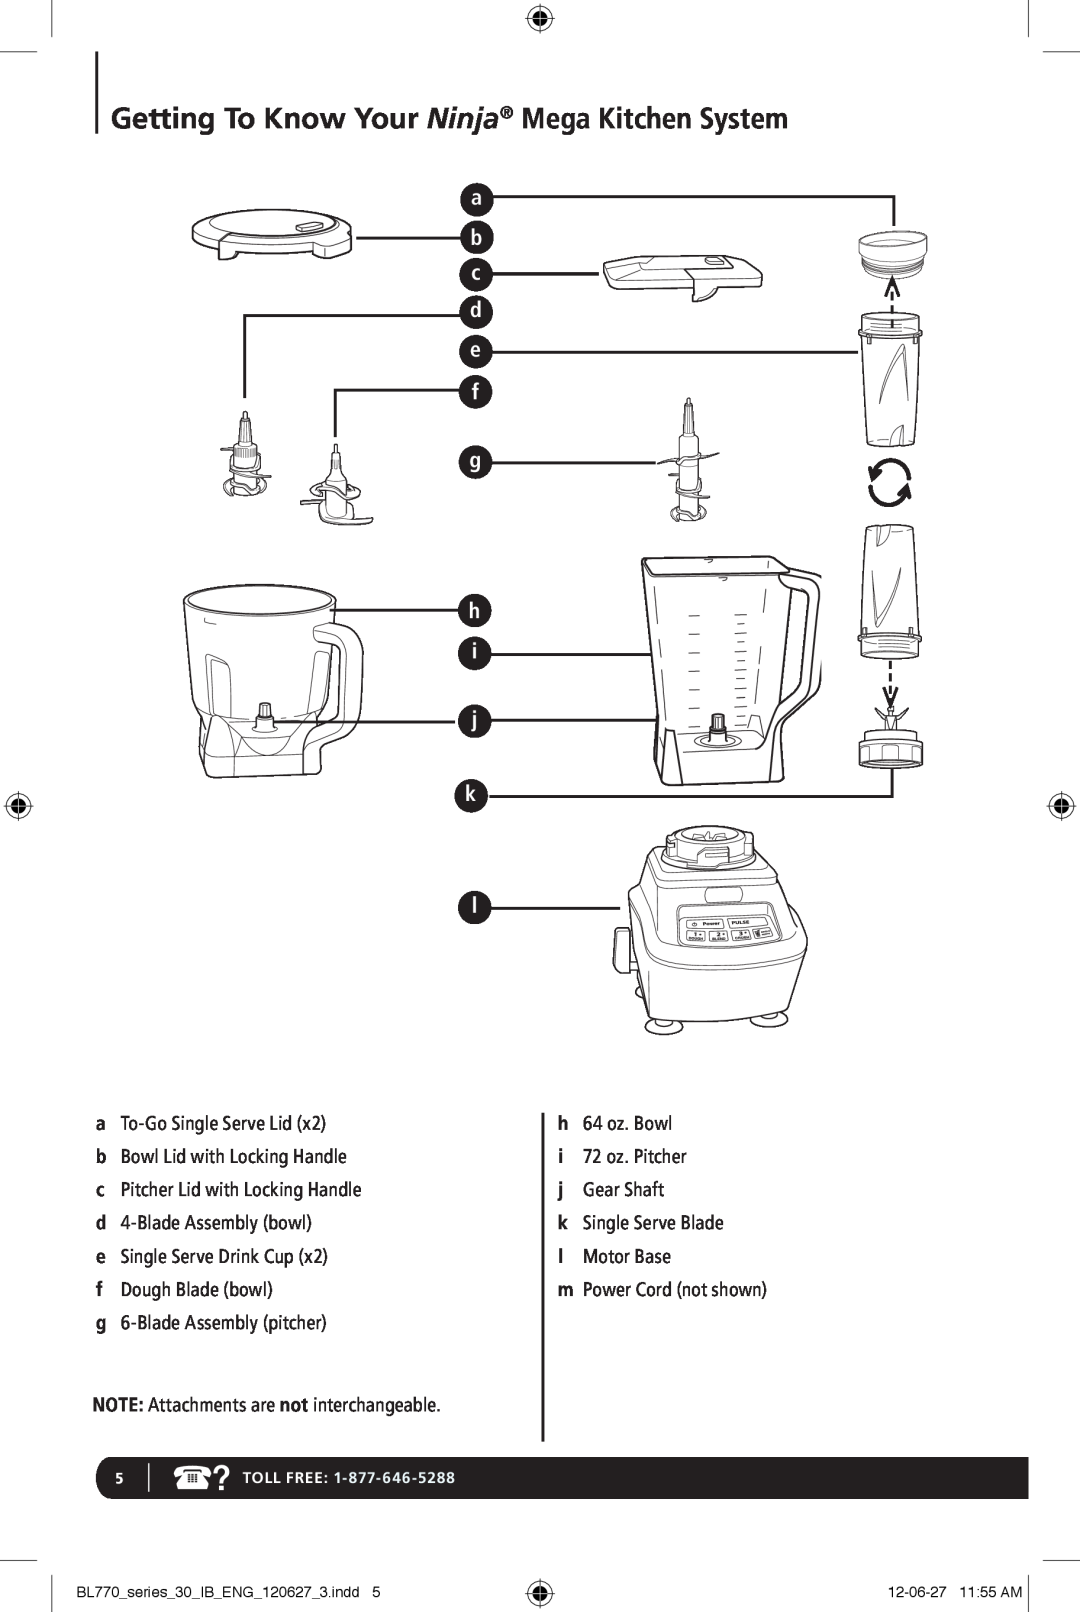 Euro-Pro BL770 manual Getting To Know Your Ninja Mega Kitchen System, a b c d e f g h i j k l 